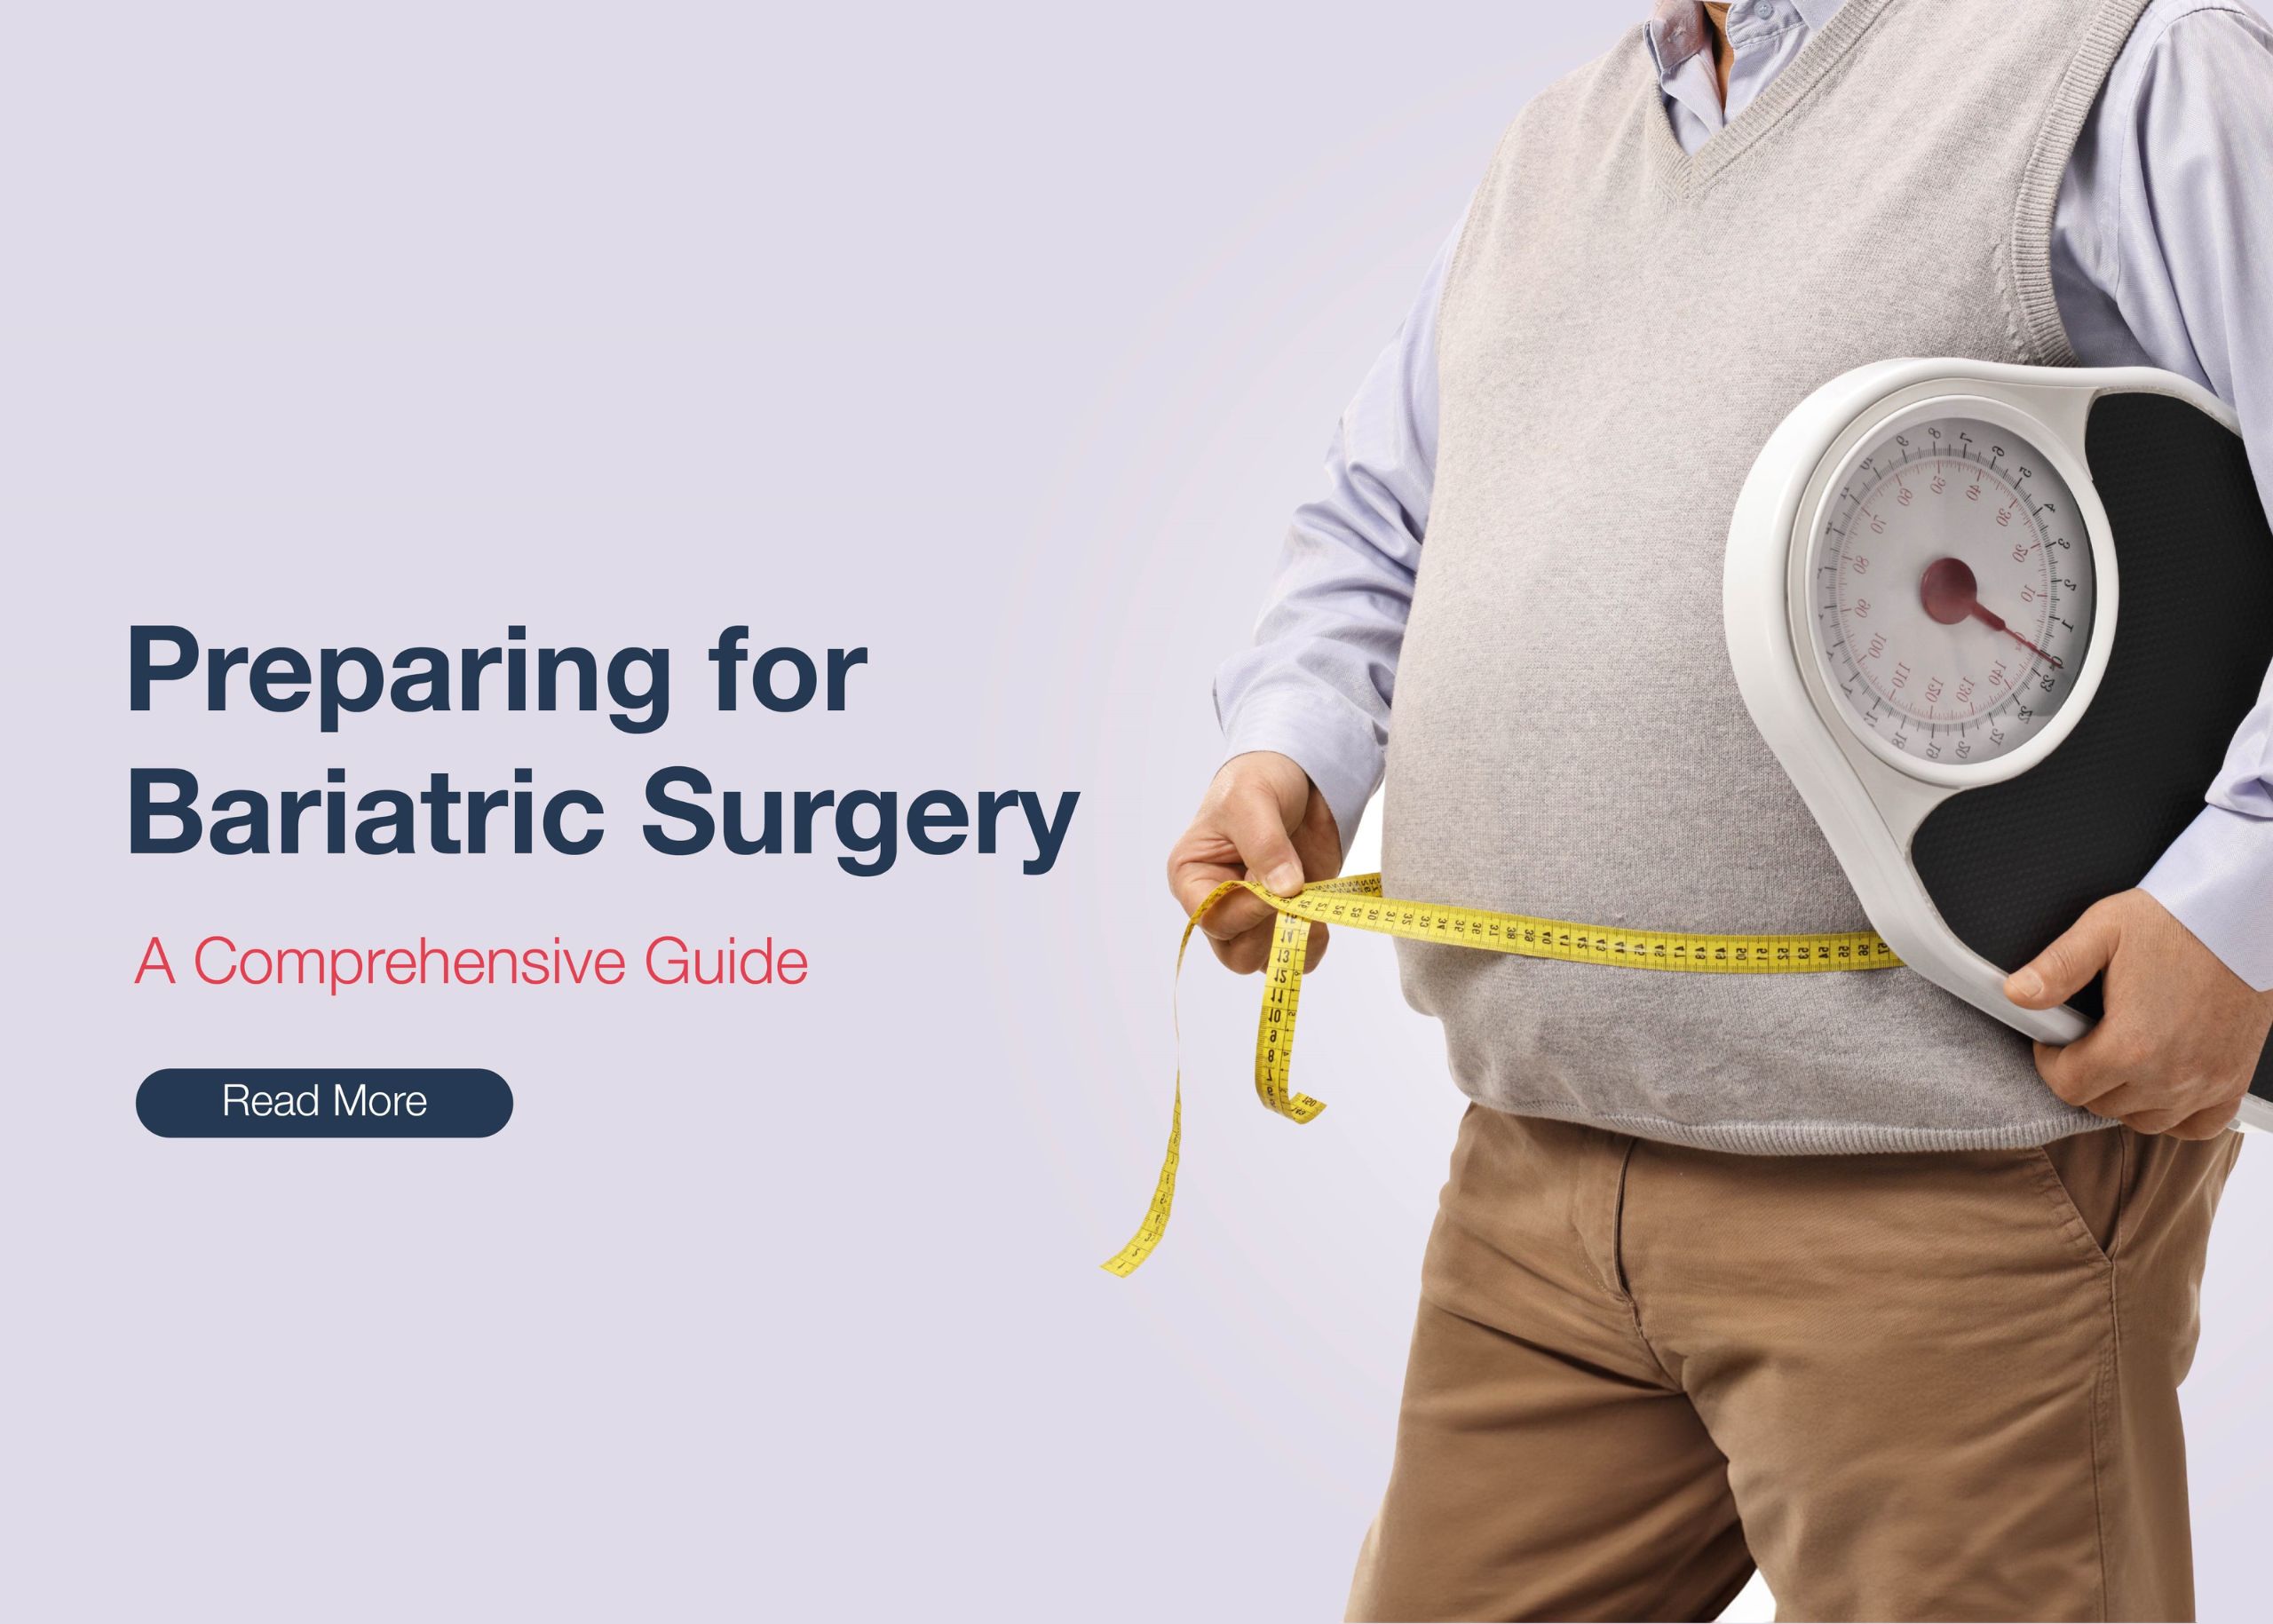 Preparing for Bariatric Surgery: A Comprehensive Guide by Medeor Hospital Dubai